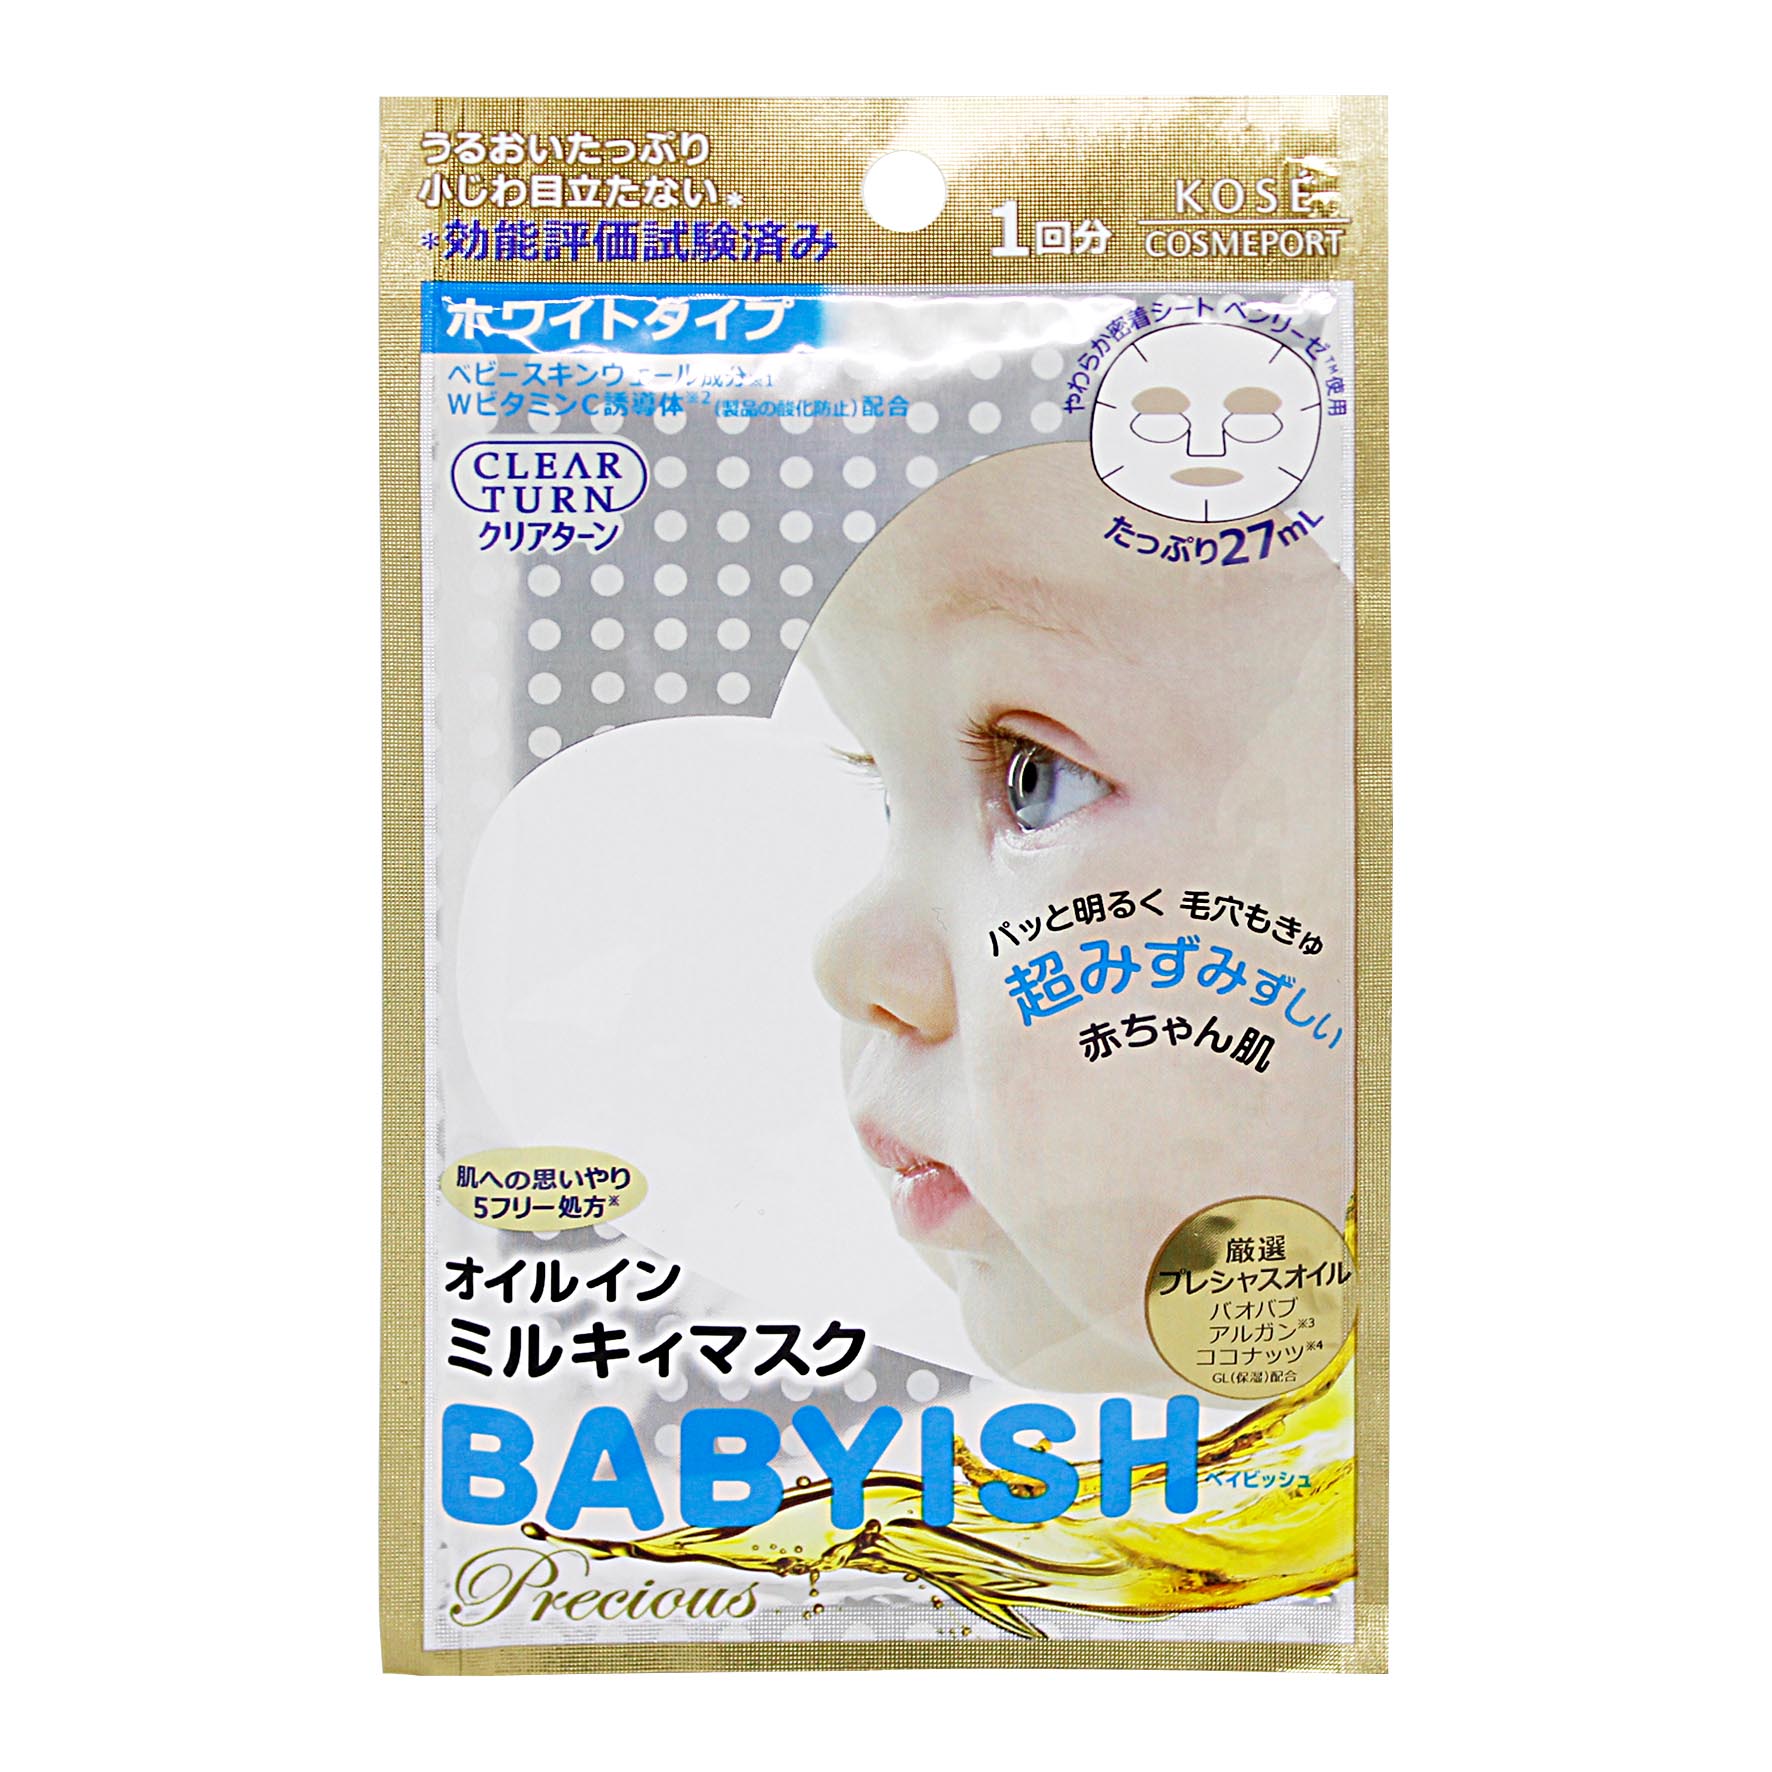 kose-clear-turn-babyish-precious-mask-c-1-sheets-buy1-get1-53-1609227756.jpg